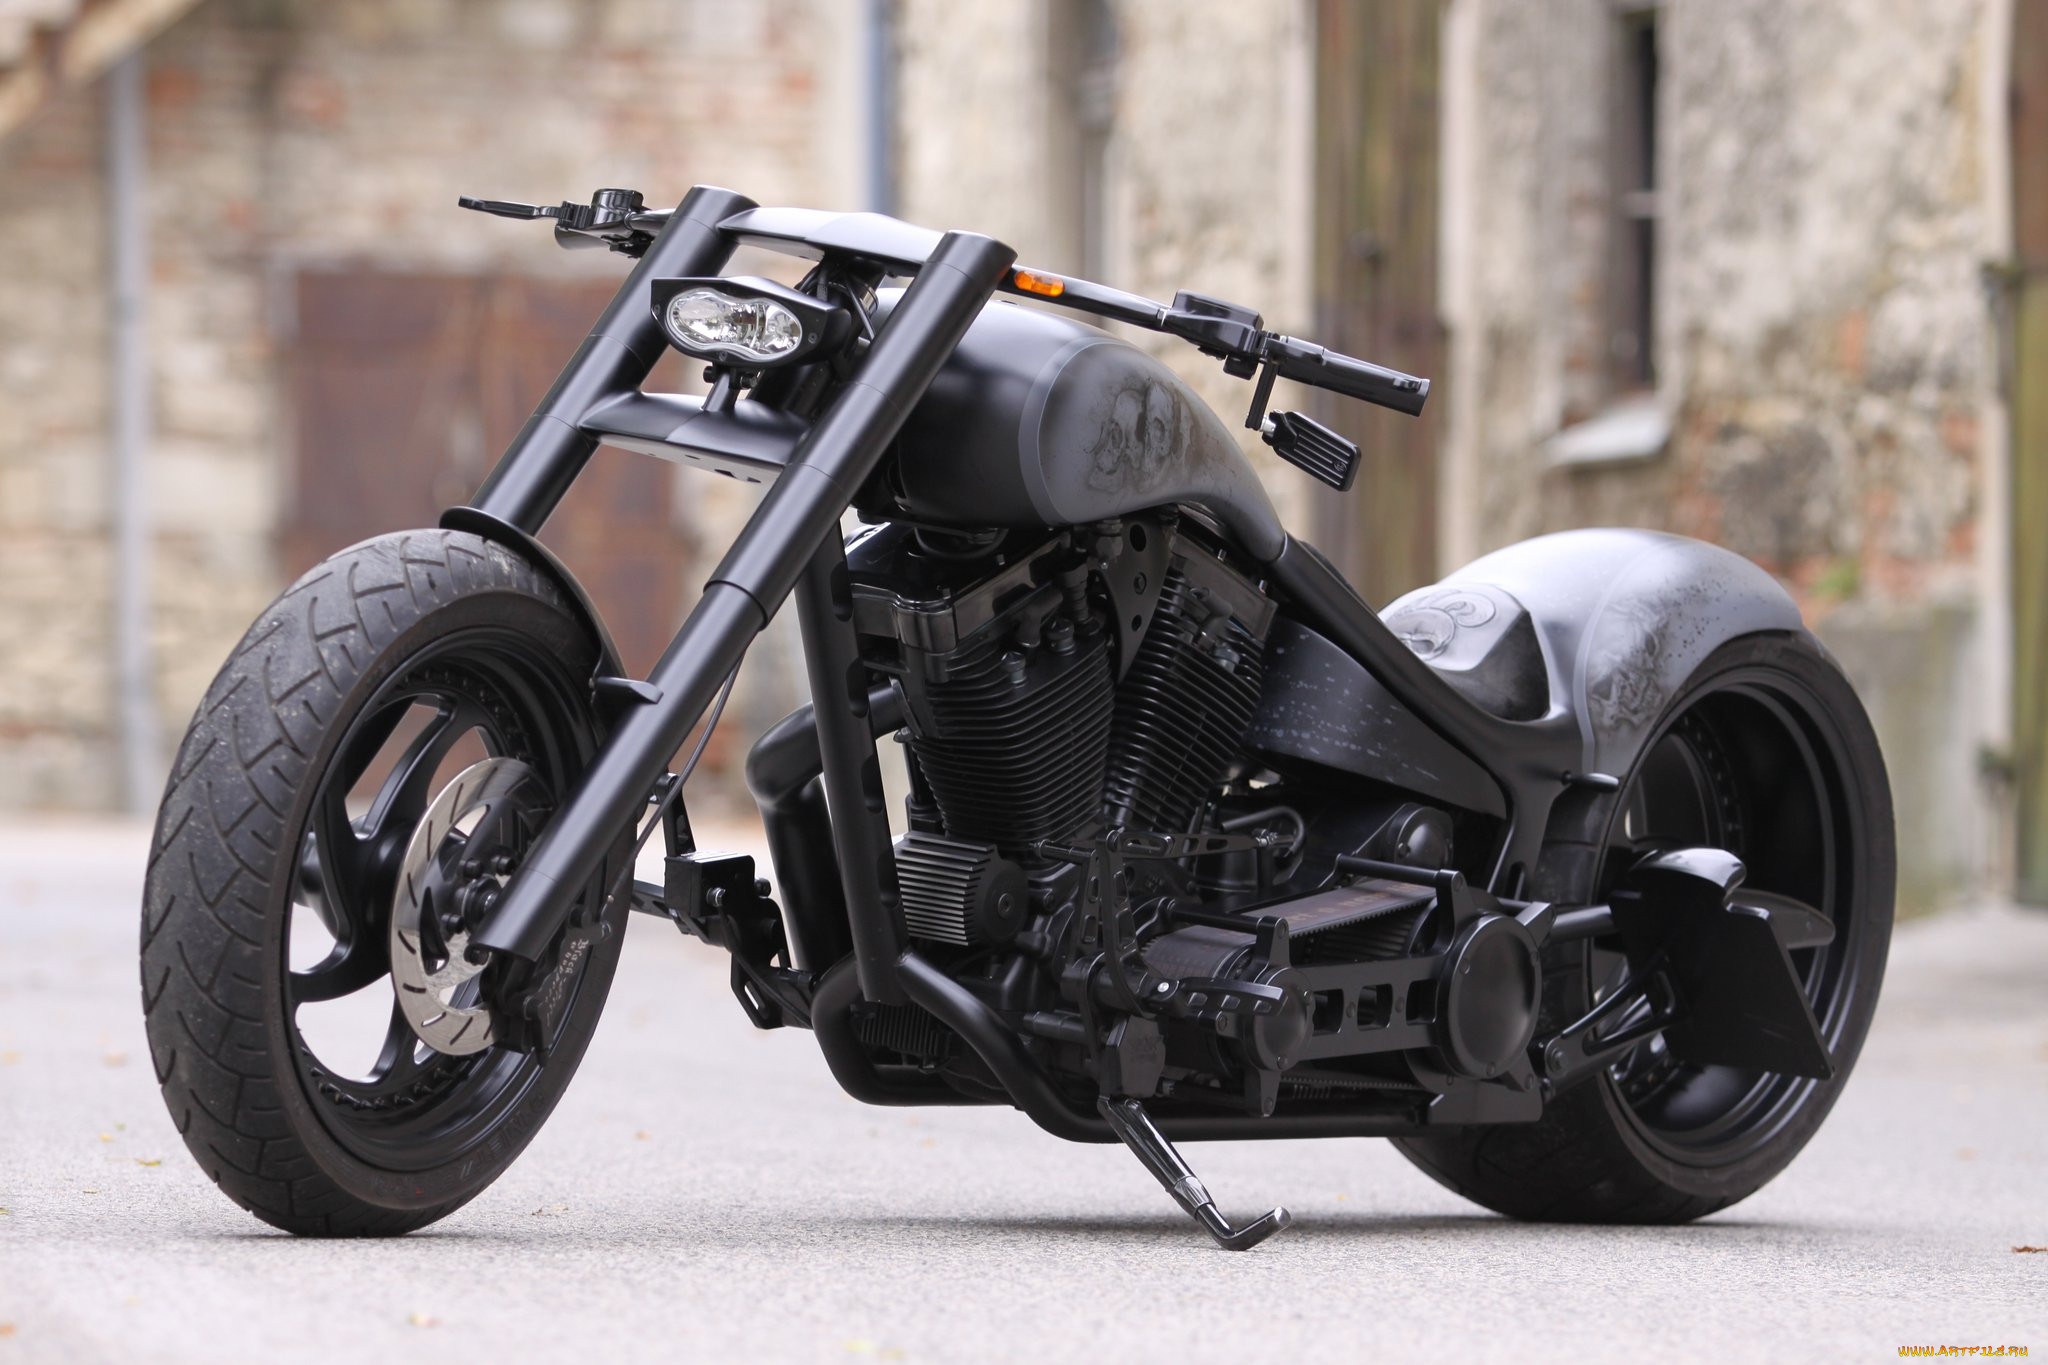 Байк 75 производитель. Мотоцикл Harley Davidson Chopper. Кастомный мотоцикл Харлей Дэвидсон. Мотоцикл Harley Davidson Custom. Чоппер Харлей Дэвидсон кастом.